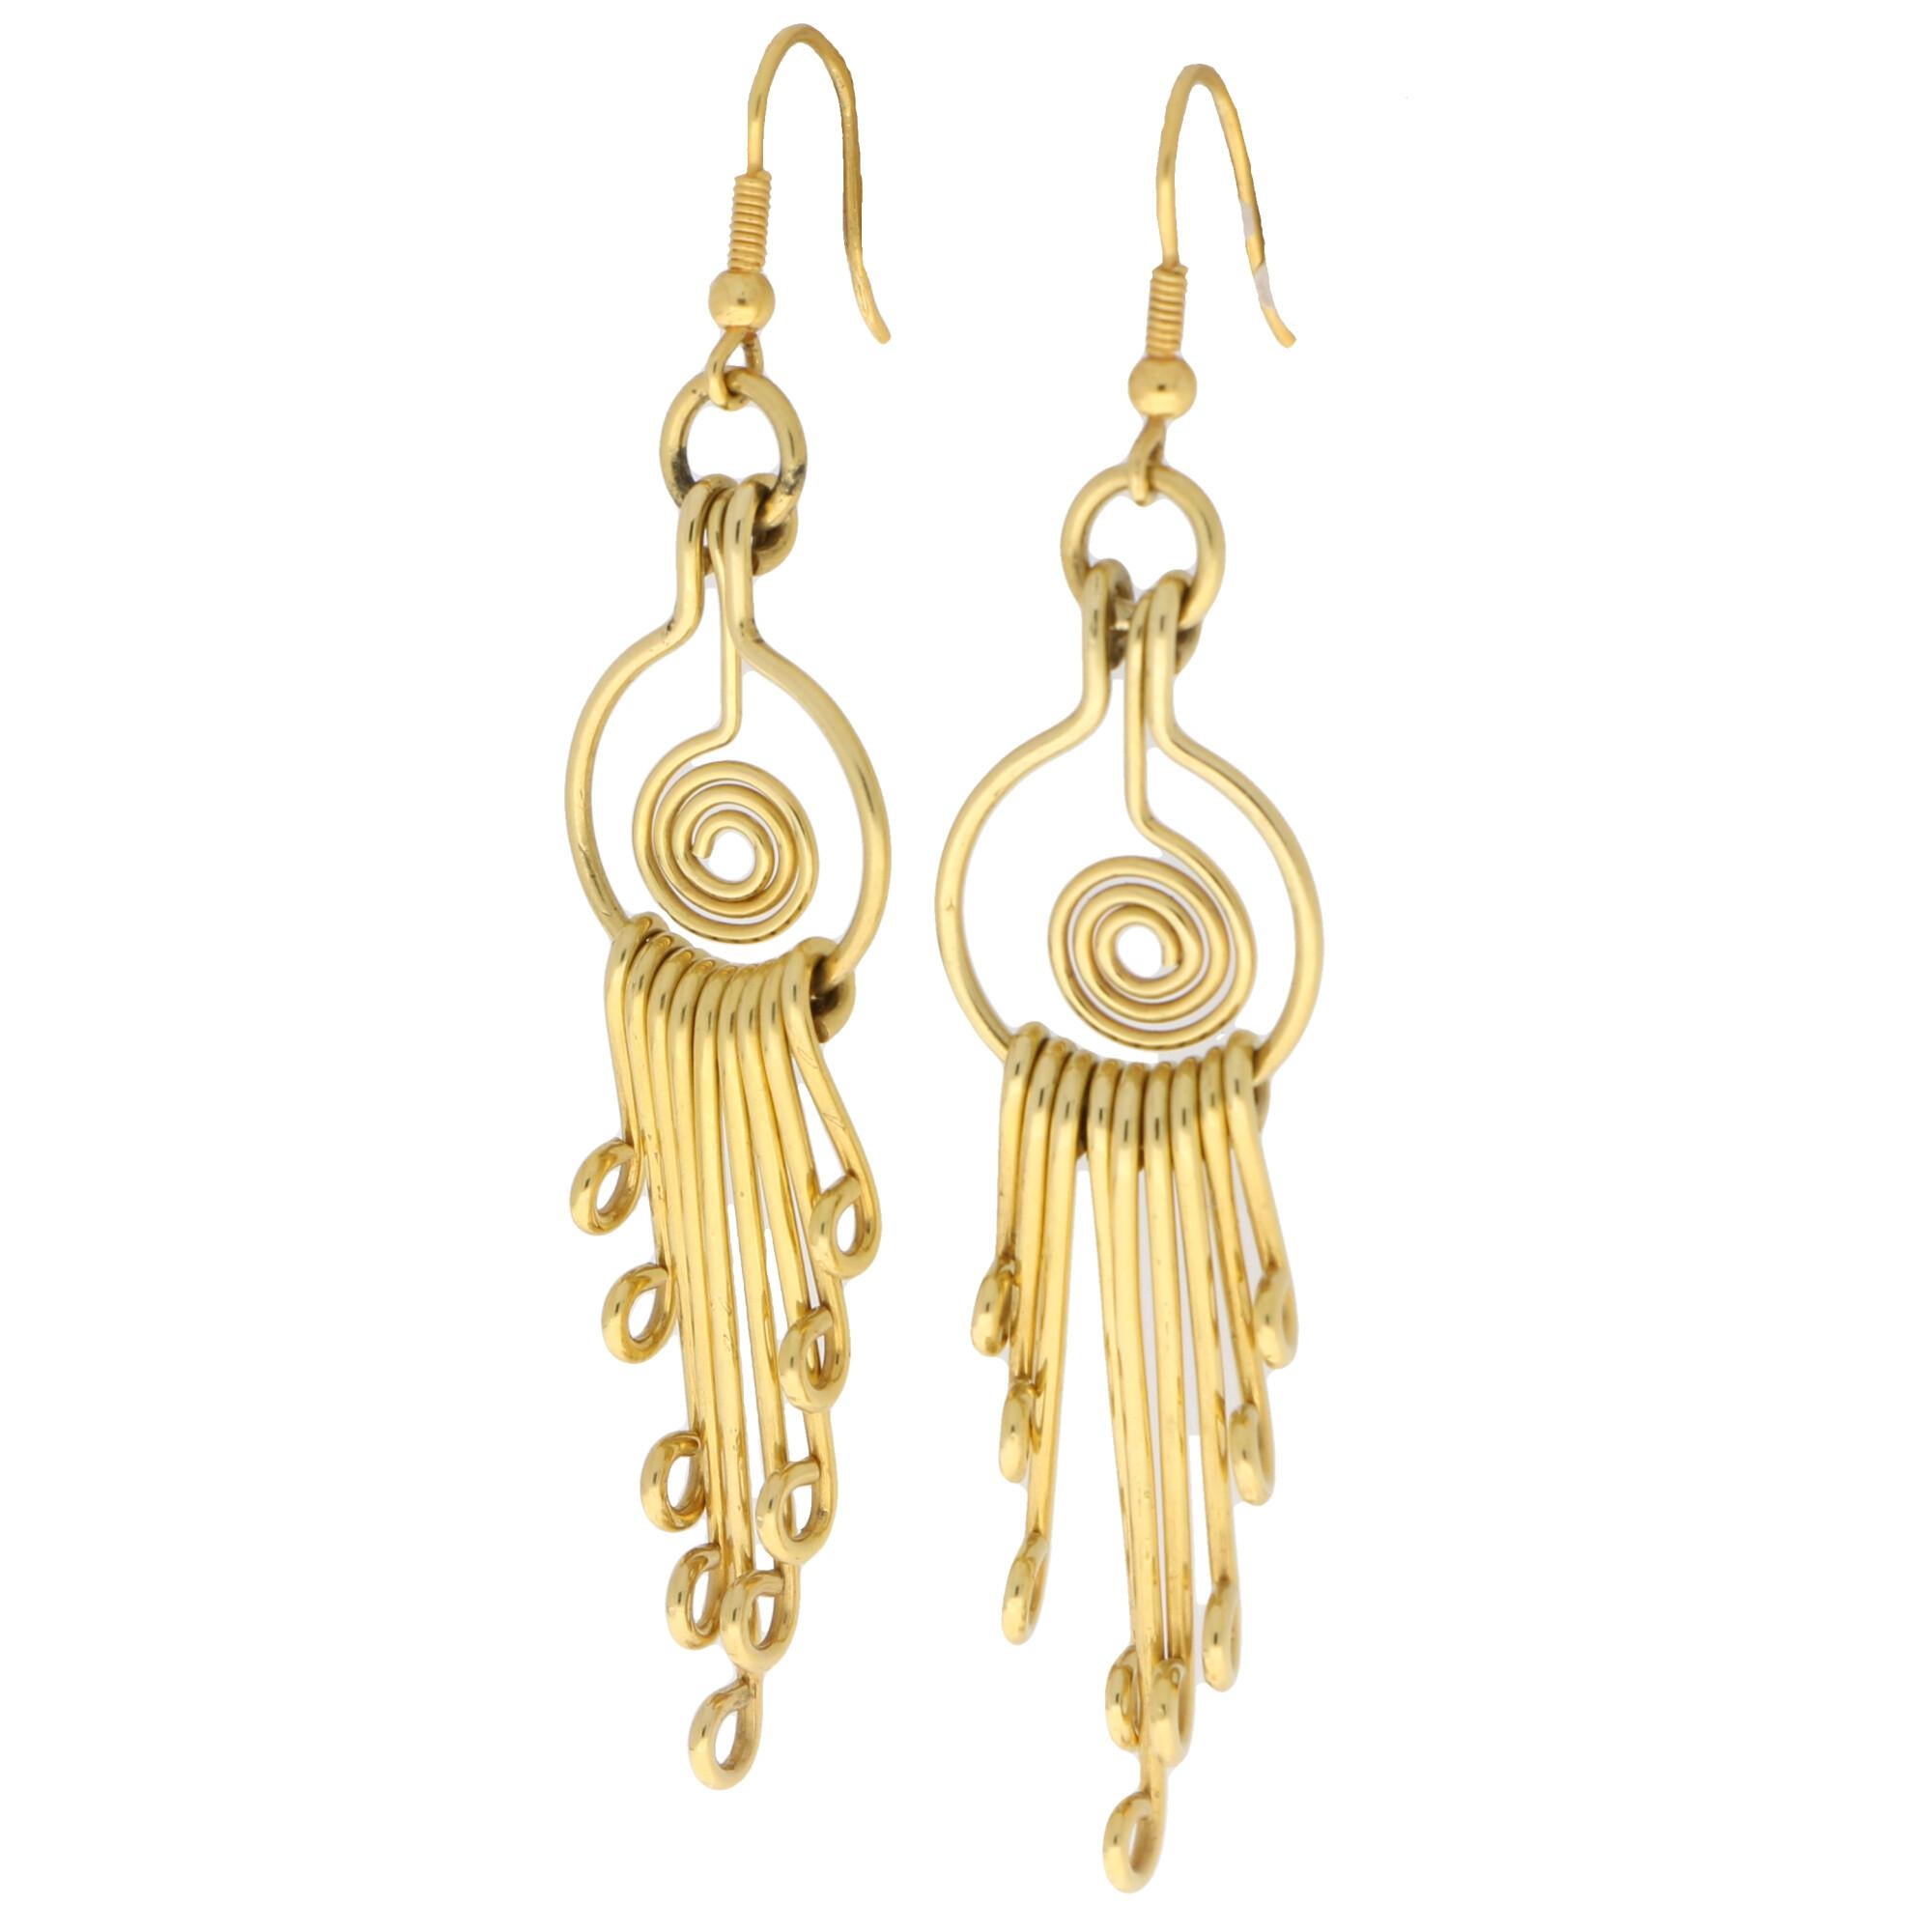 Retro Wire-Work Swirl Dangle Drop Earrings Set in 18 Karat Yellow Gold In Good Condition For Sale In London, GB